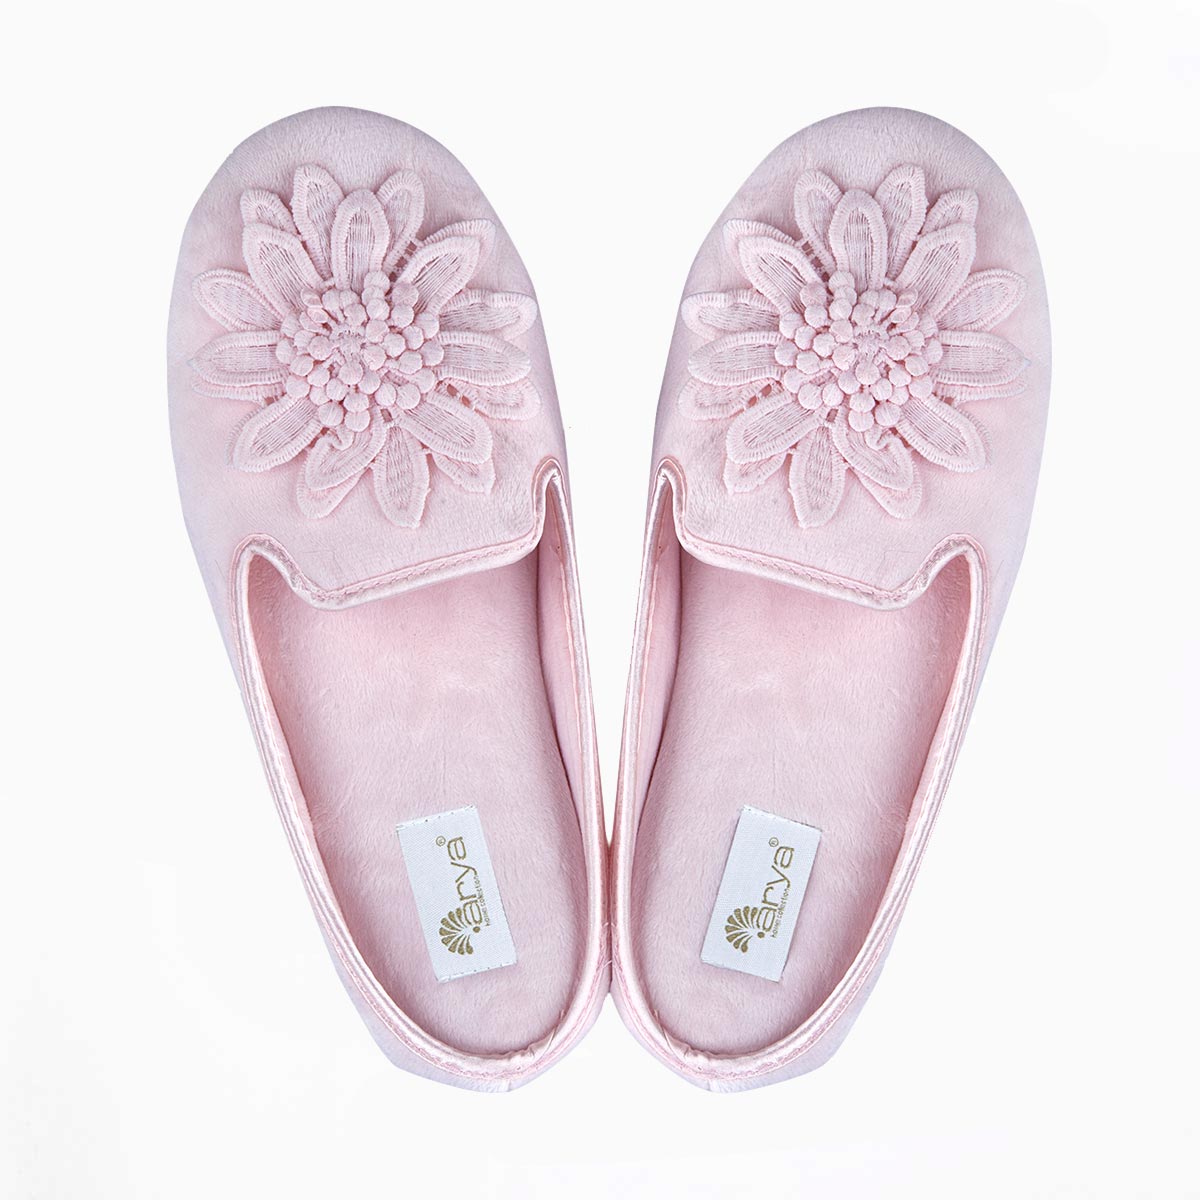 Тапочки-балетки Lacey цвет: розовый (39-40), размер 39-40